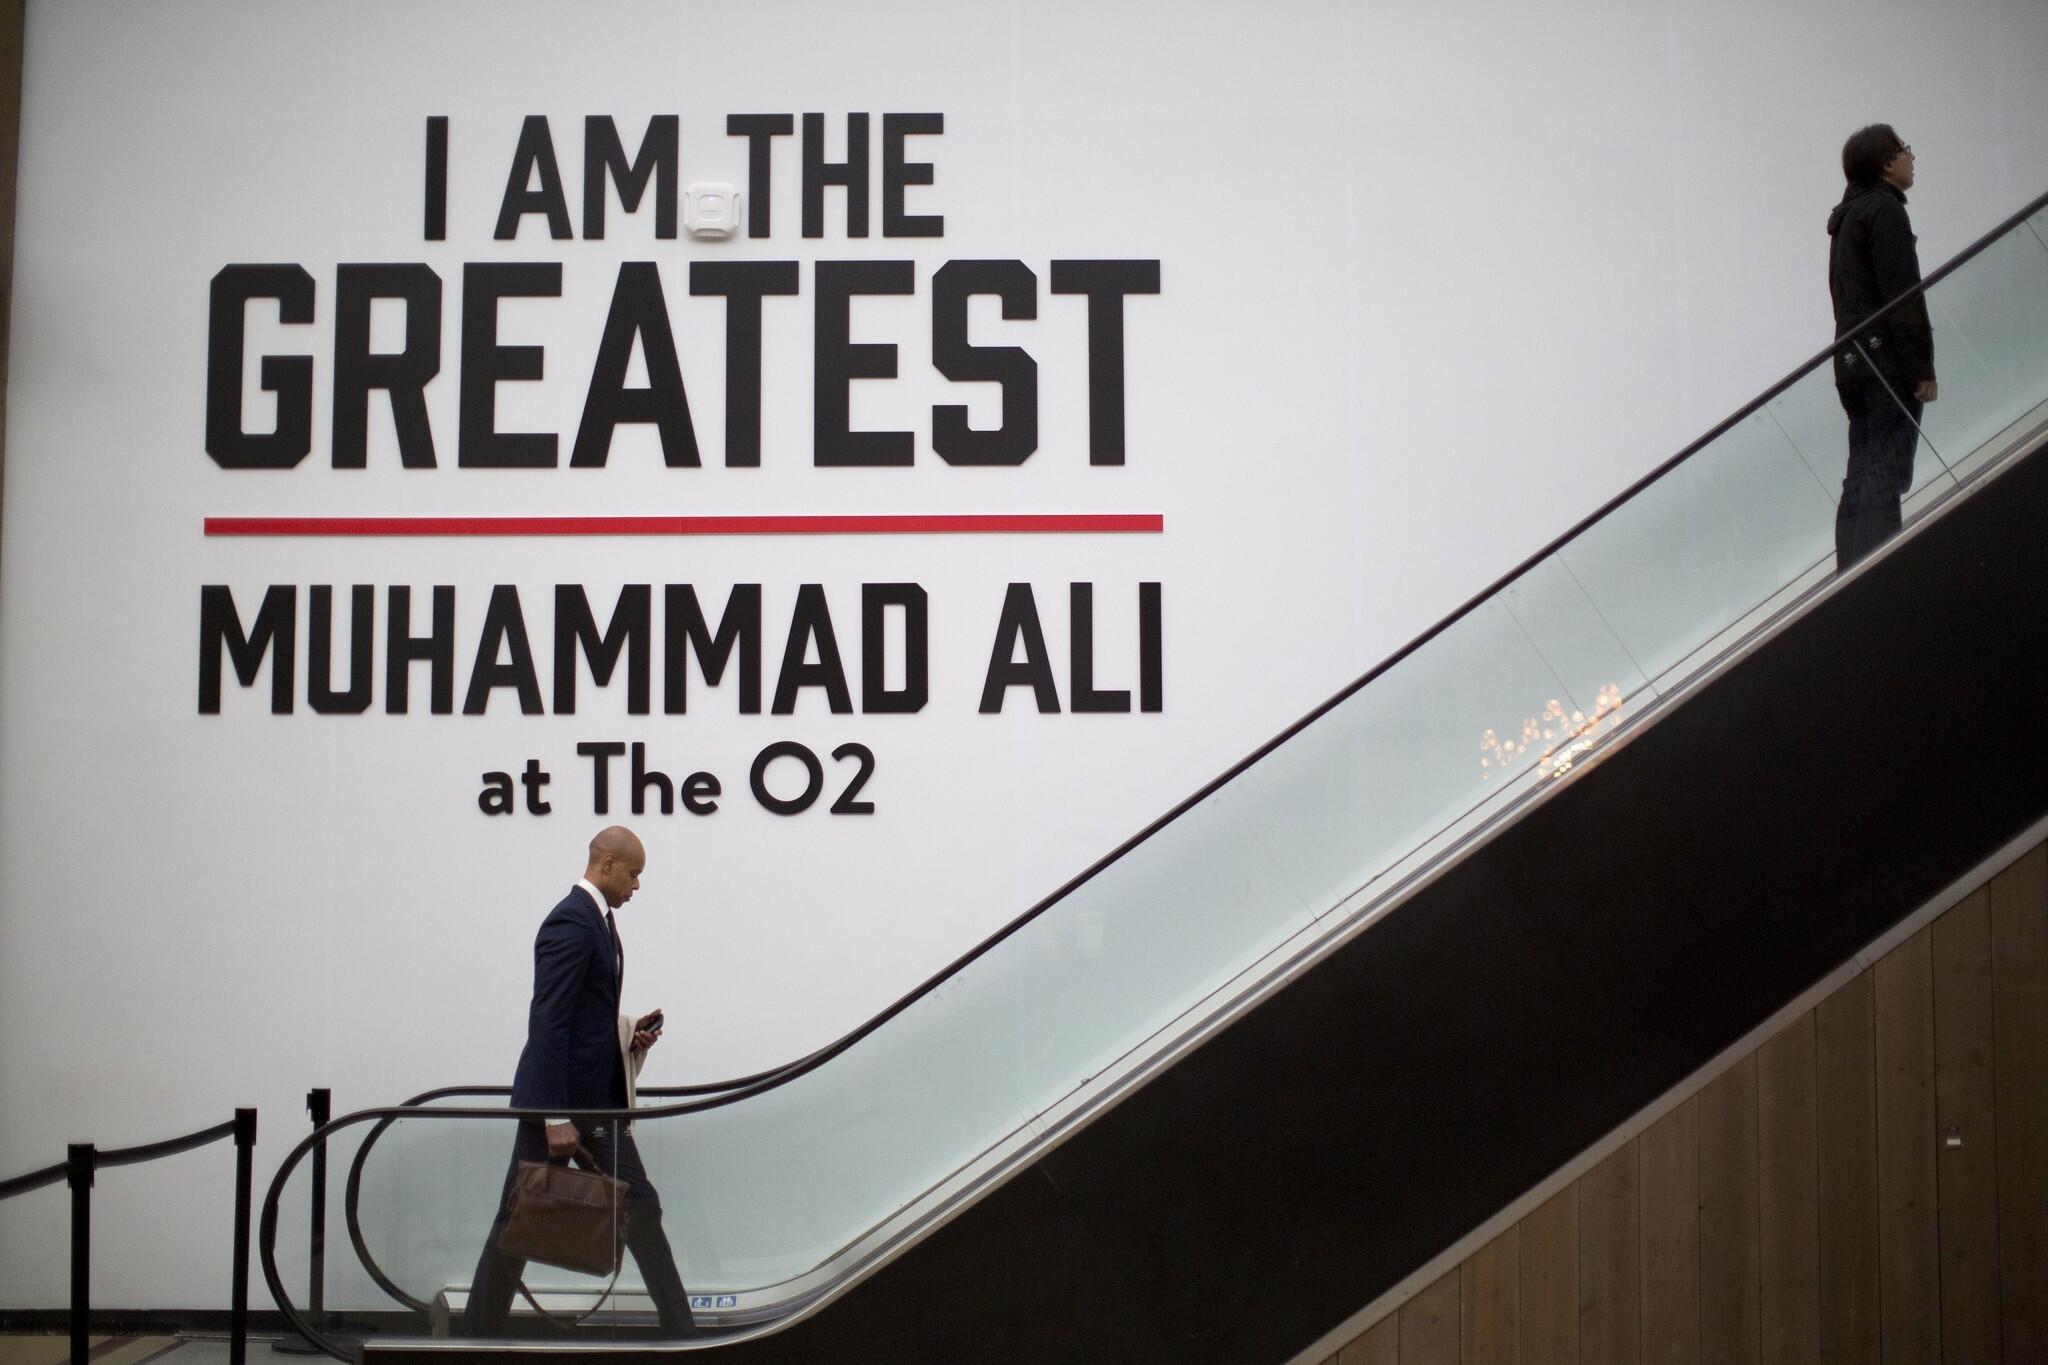 'I Am The Greatest' exhibit